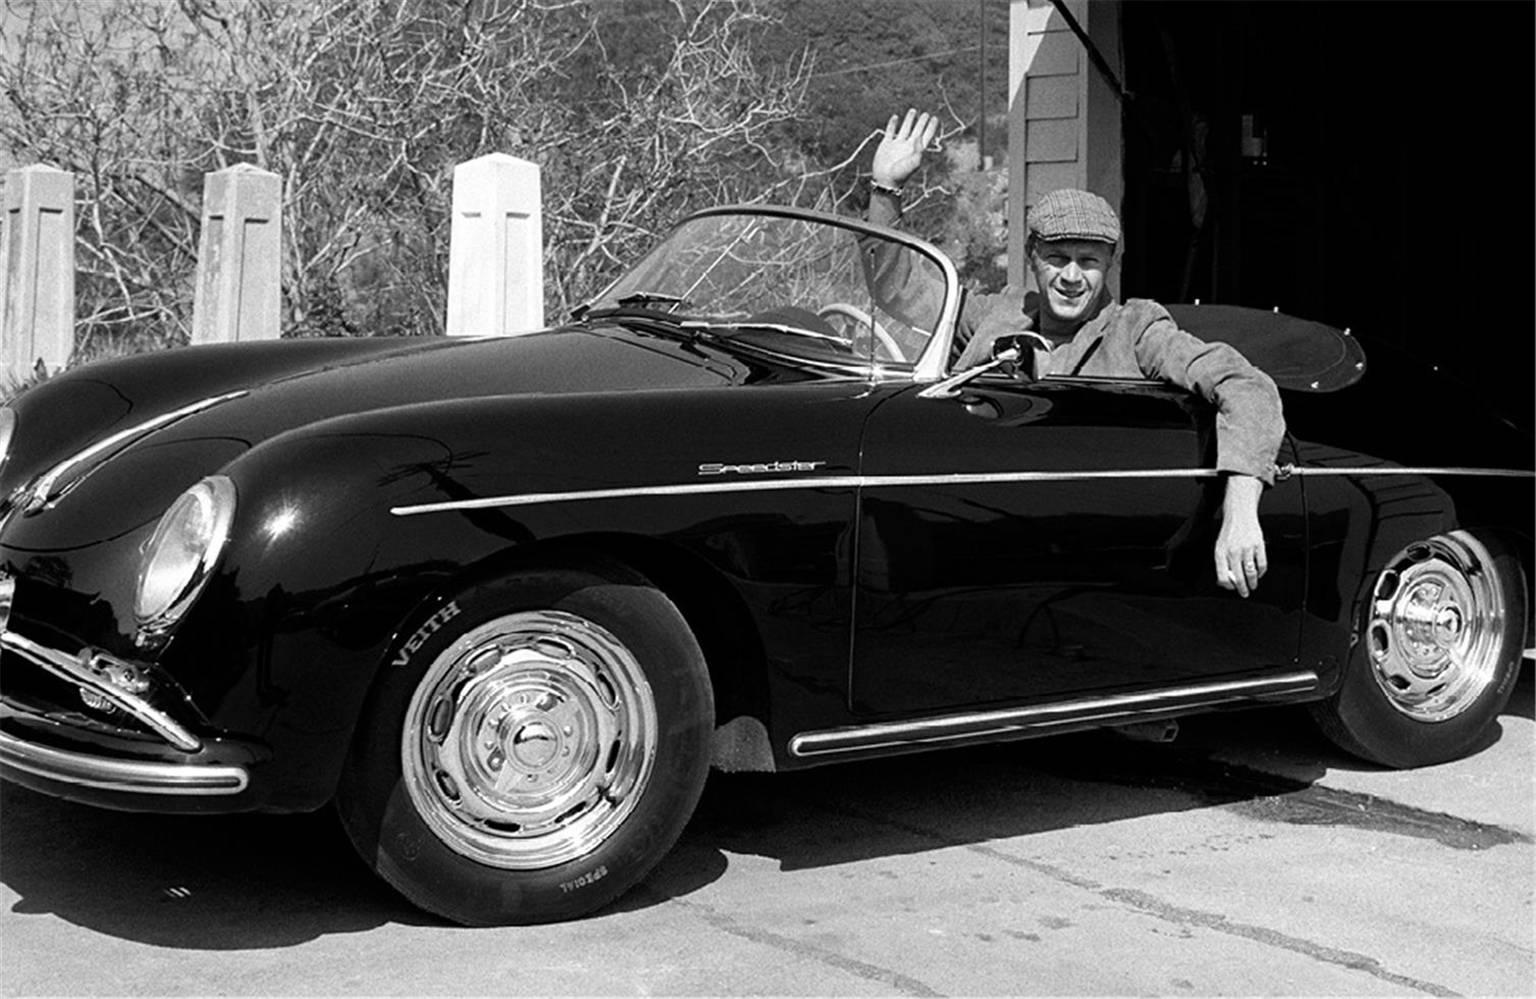 John R. Hamilton Black and White Photograph - Steve McQueen in his Porsche, Los Angeles, California, 1960